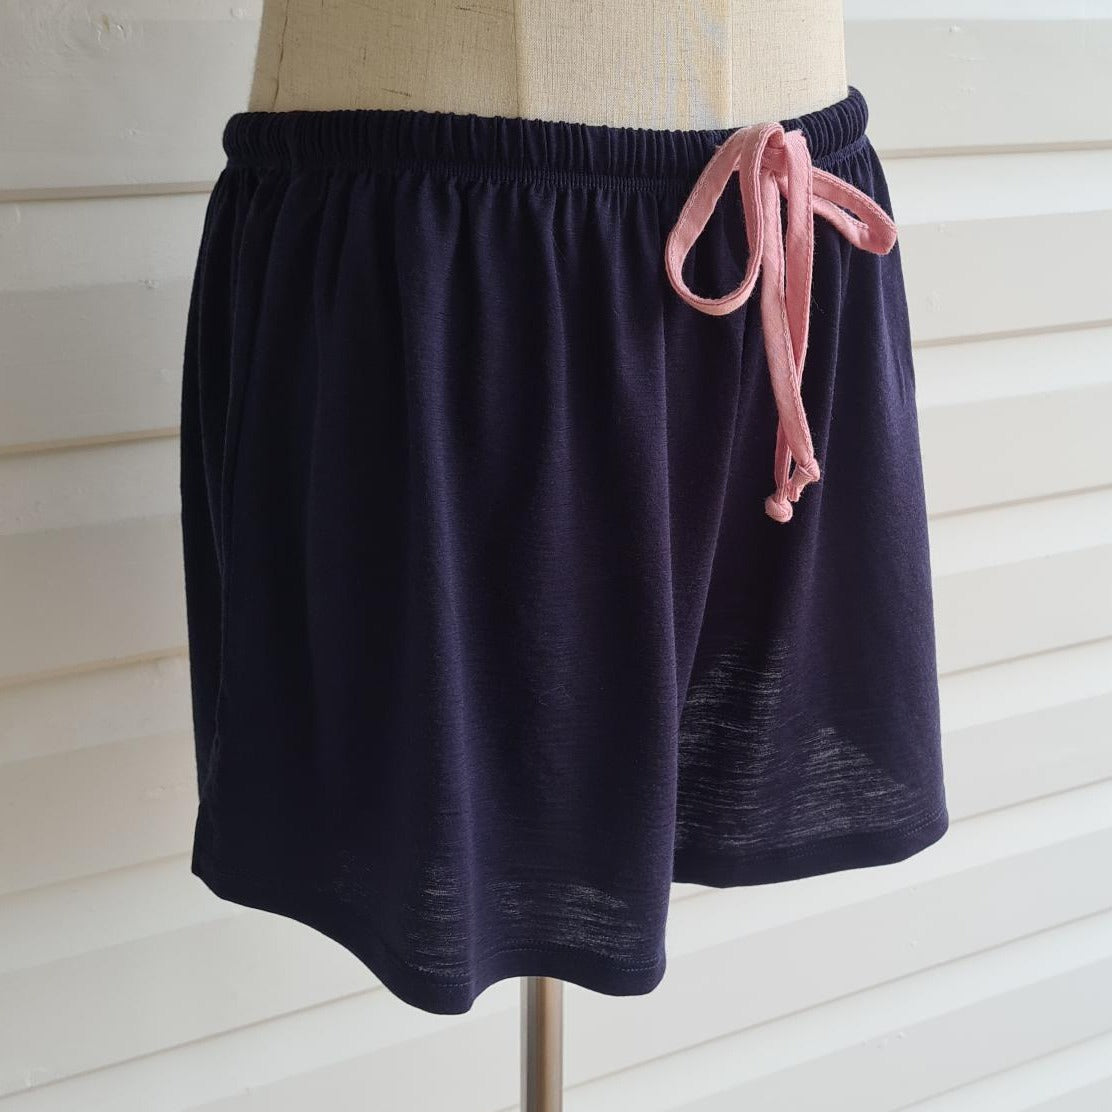 Women's Sleep Shorts | 100% Merino Wool Navy- Dusty Pink Tie